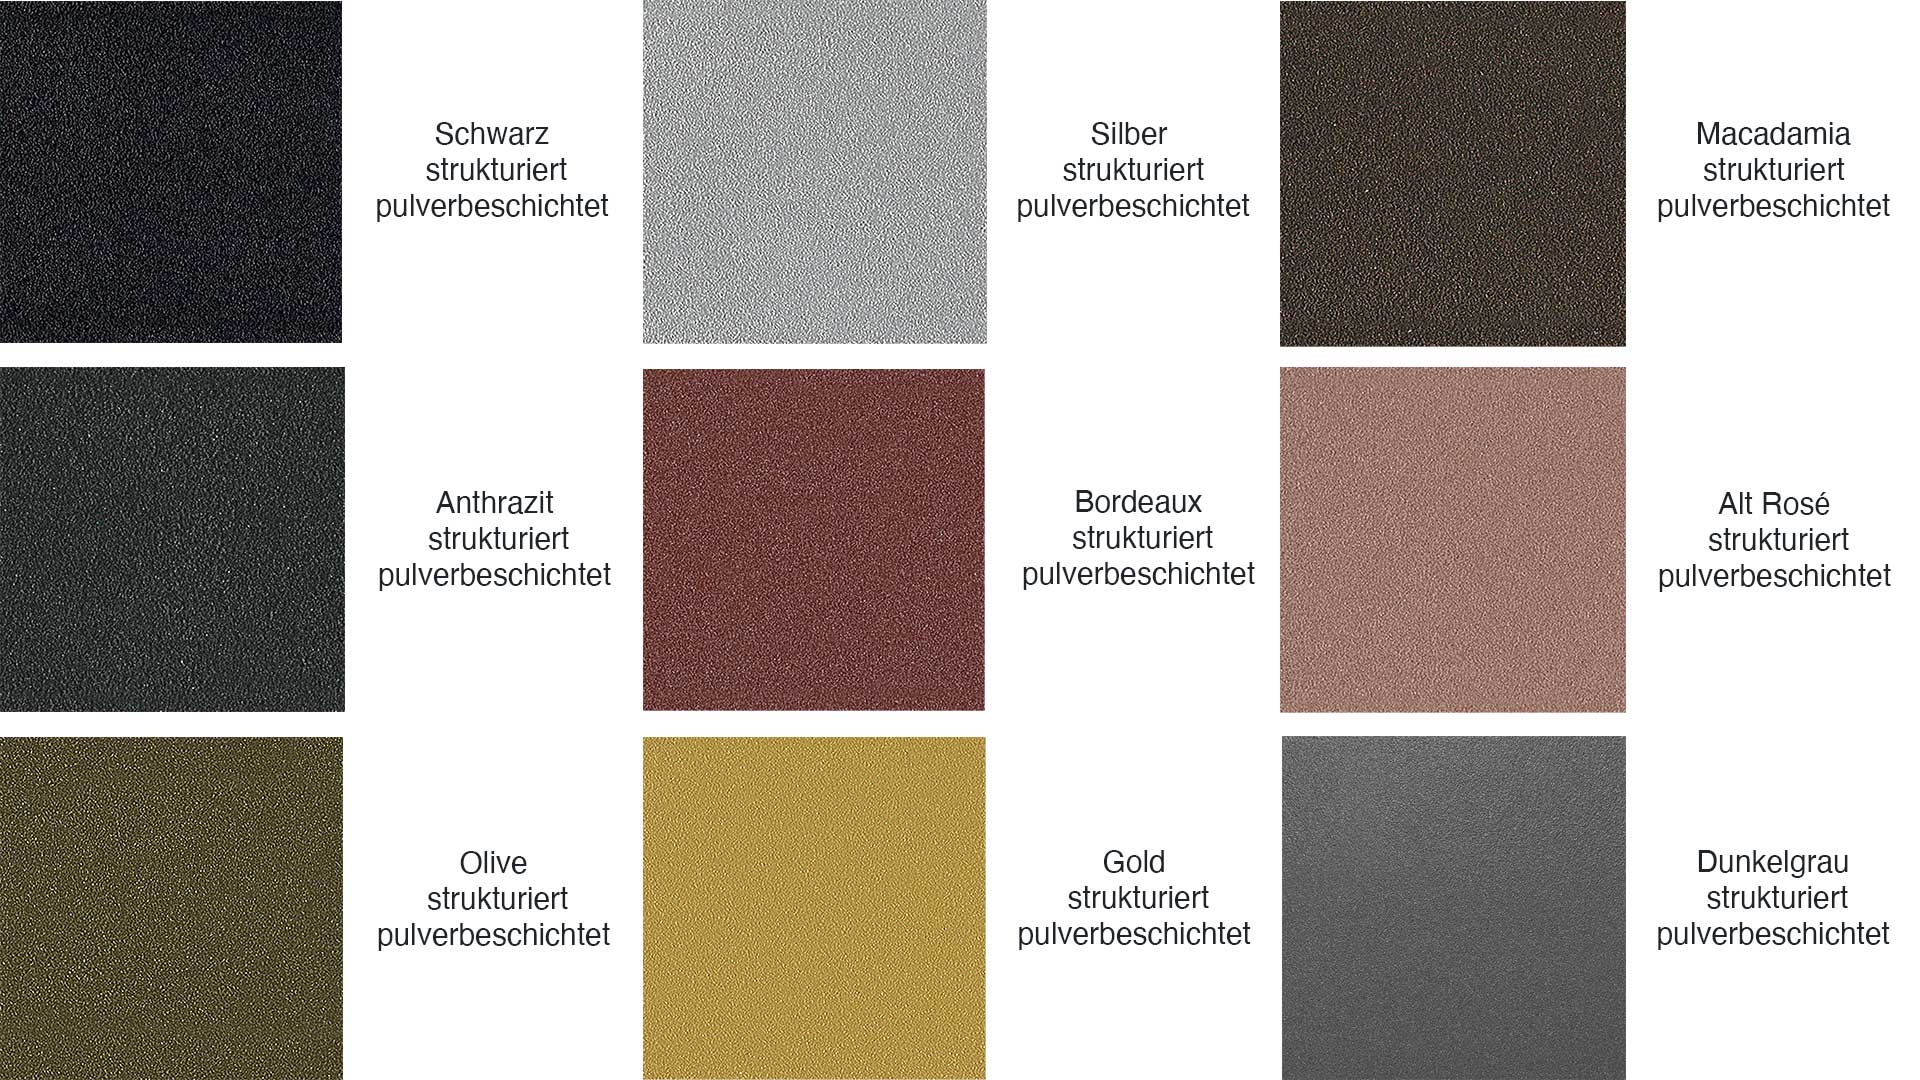 tischgestell-metall-lack-filigran-grau-anthrazit-schwarz-oliv-gold-alt-rose-bordeaux-rot-macadamia-silber-dunkelgrau